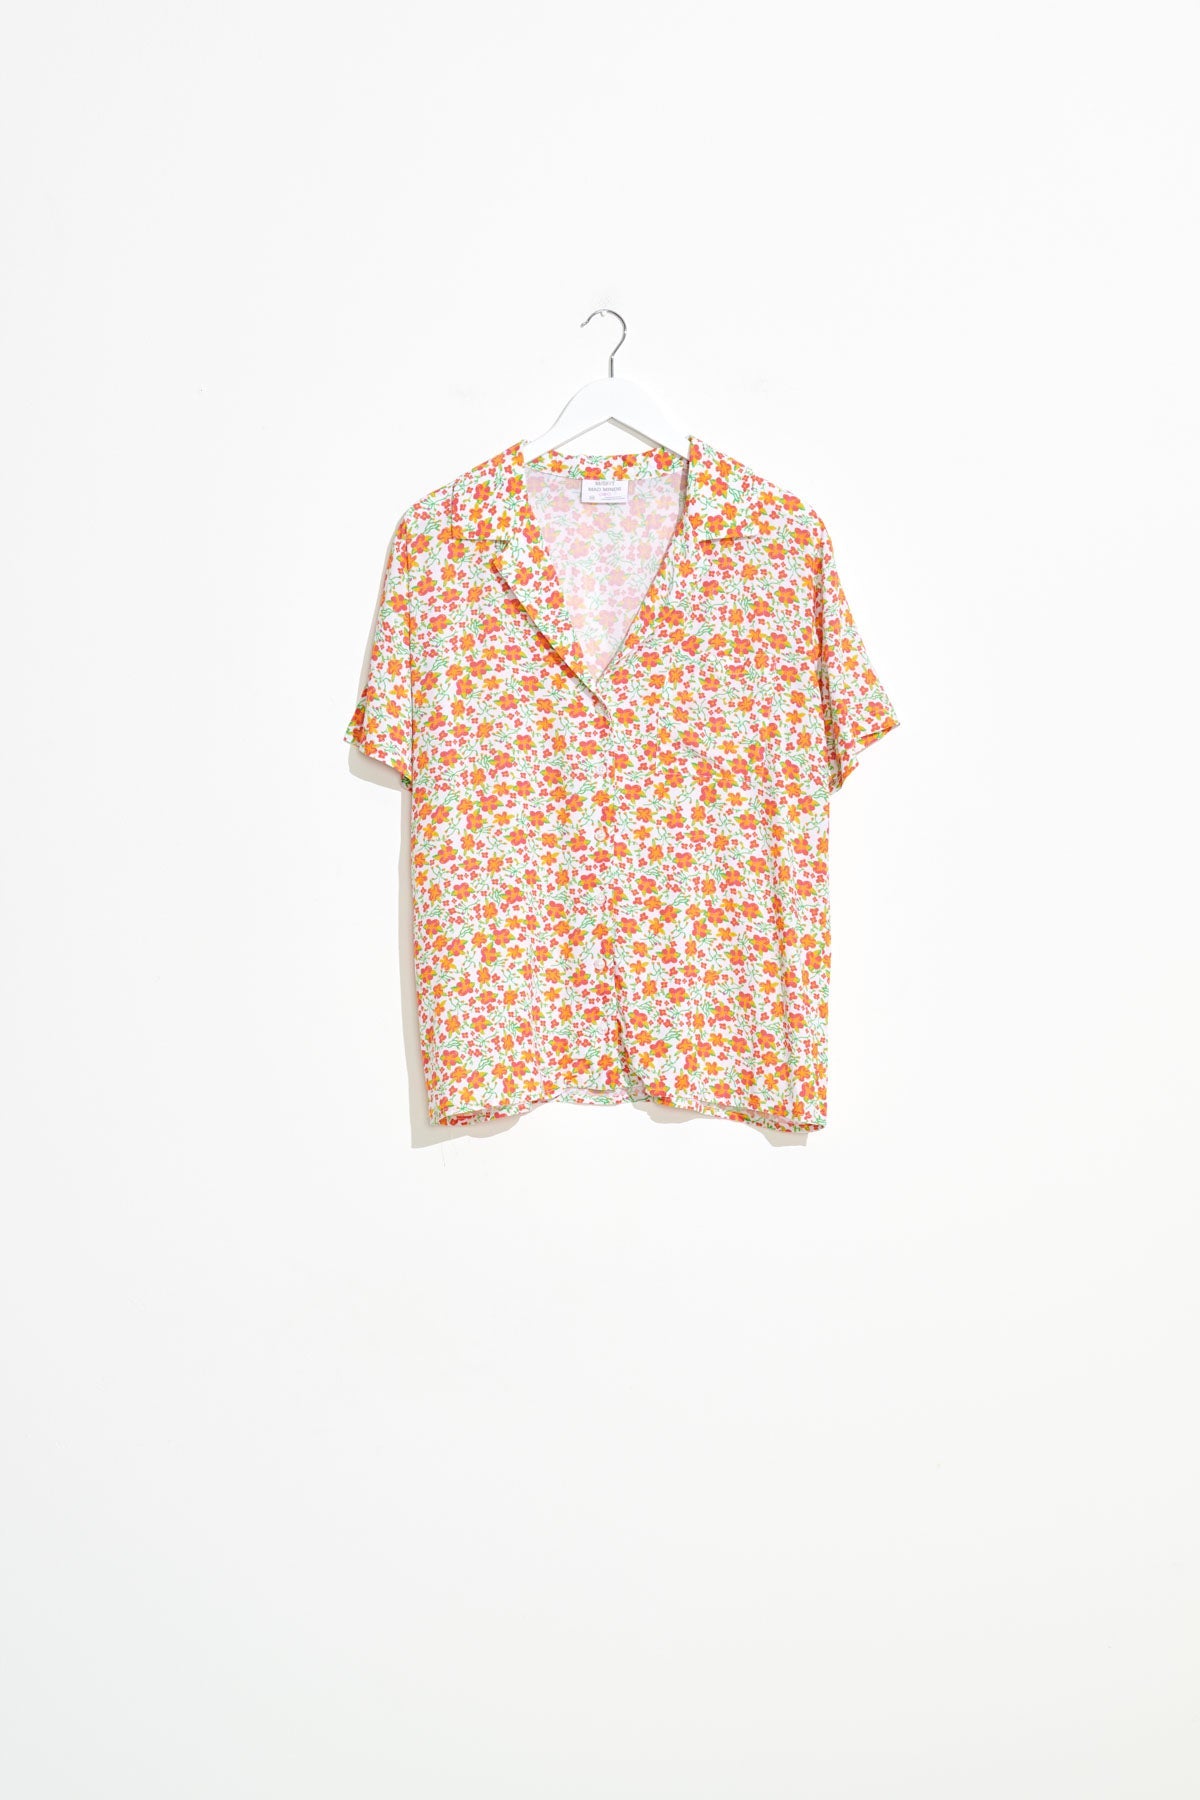 Misfit Shapes - Primavera OS Shirt - White Floral